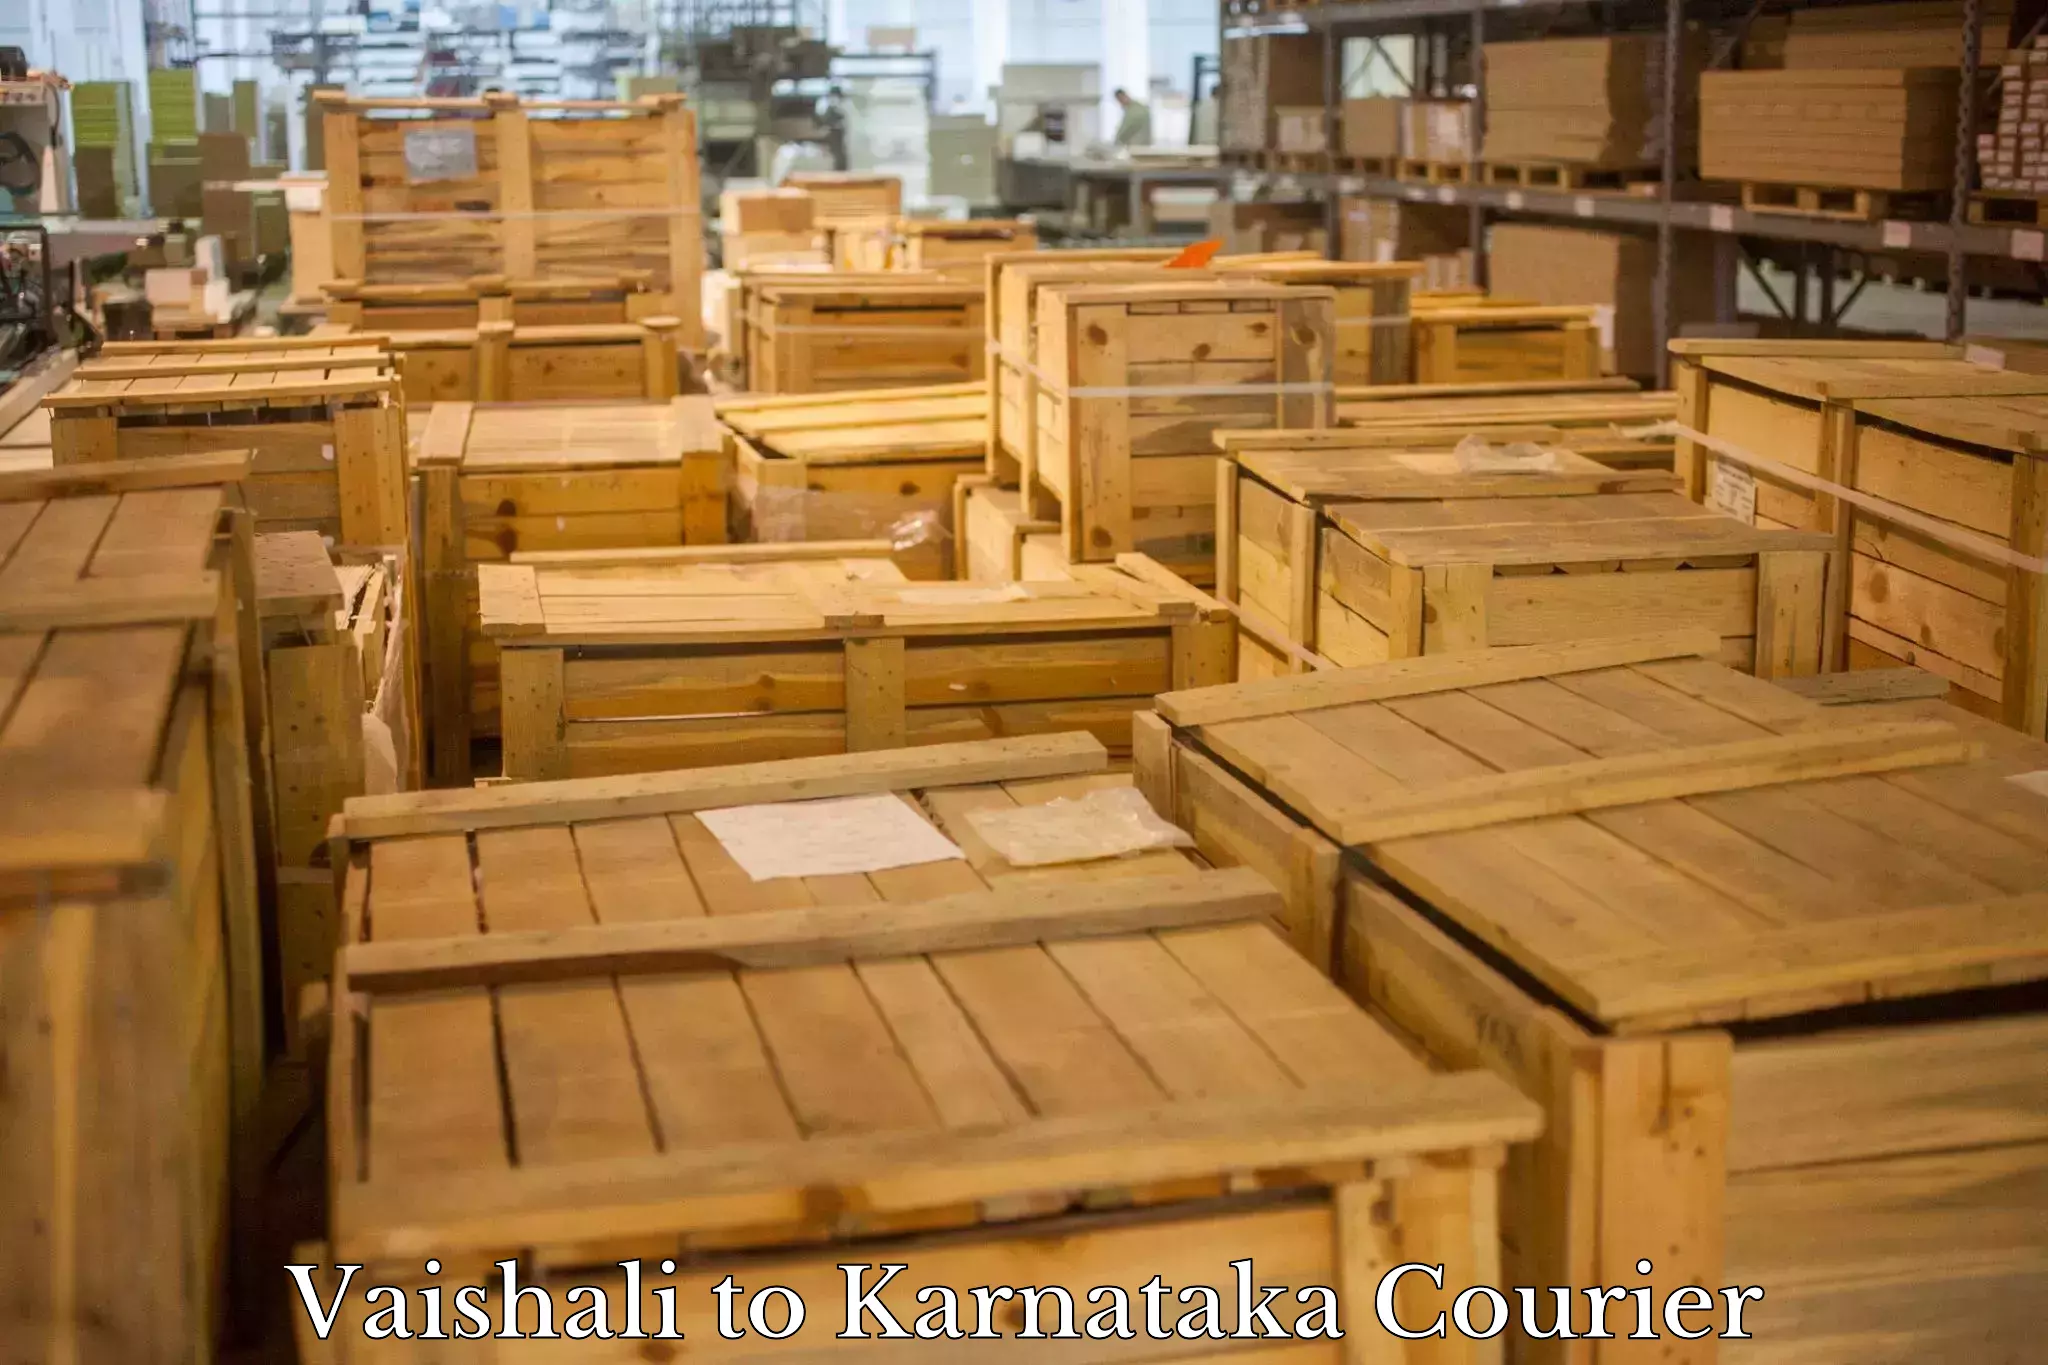 Advanced courier platforms Vaishali to Kanjarakatte